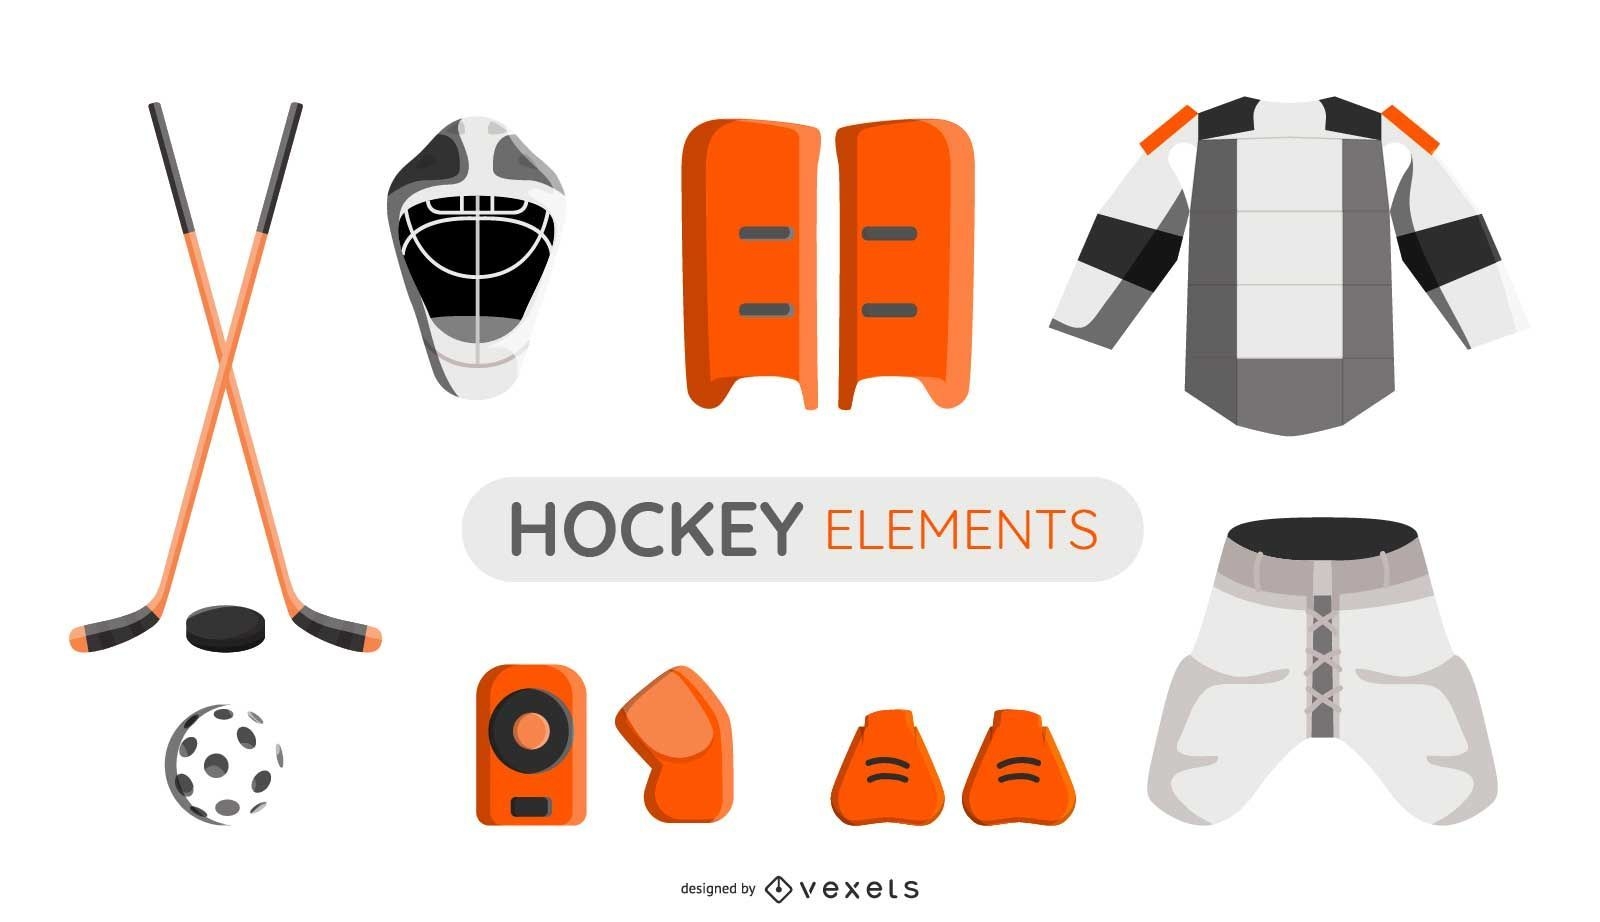 Hockey elements illustration set